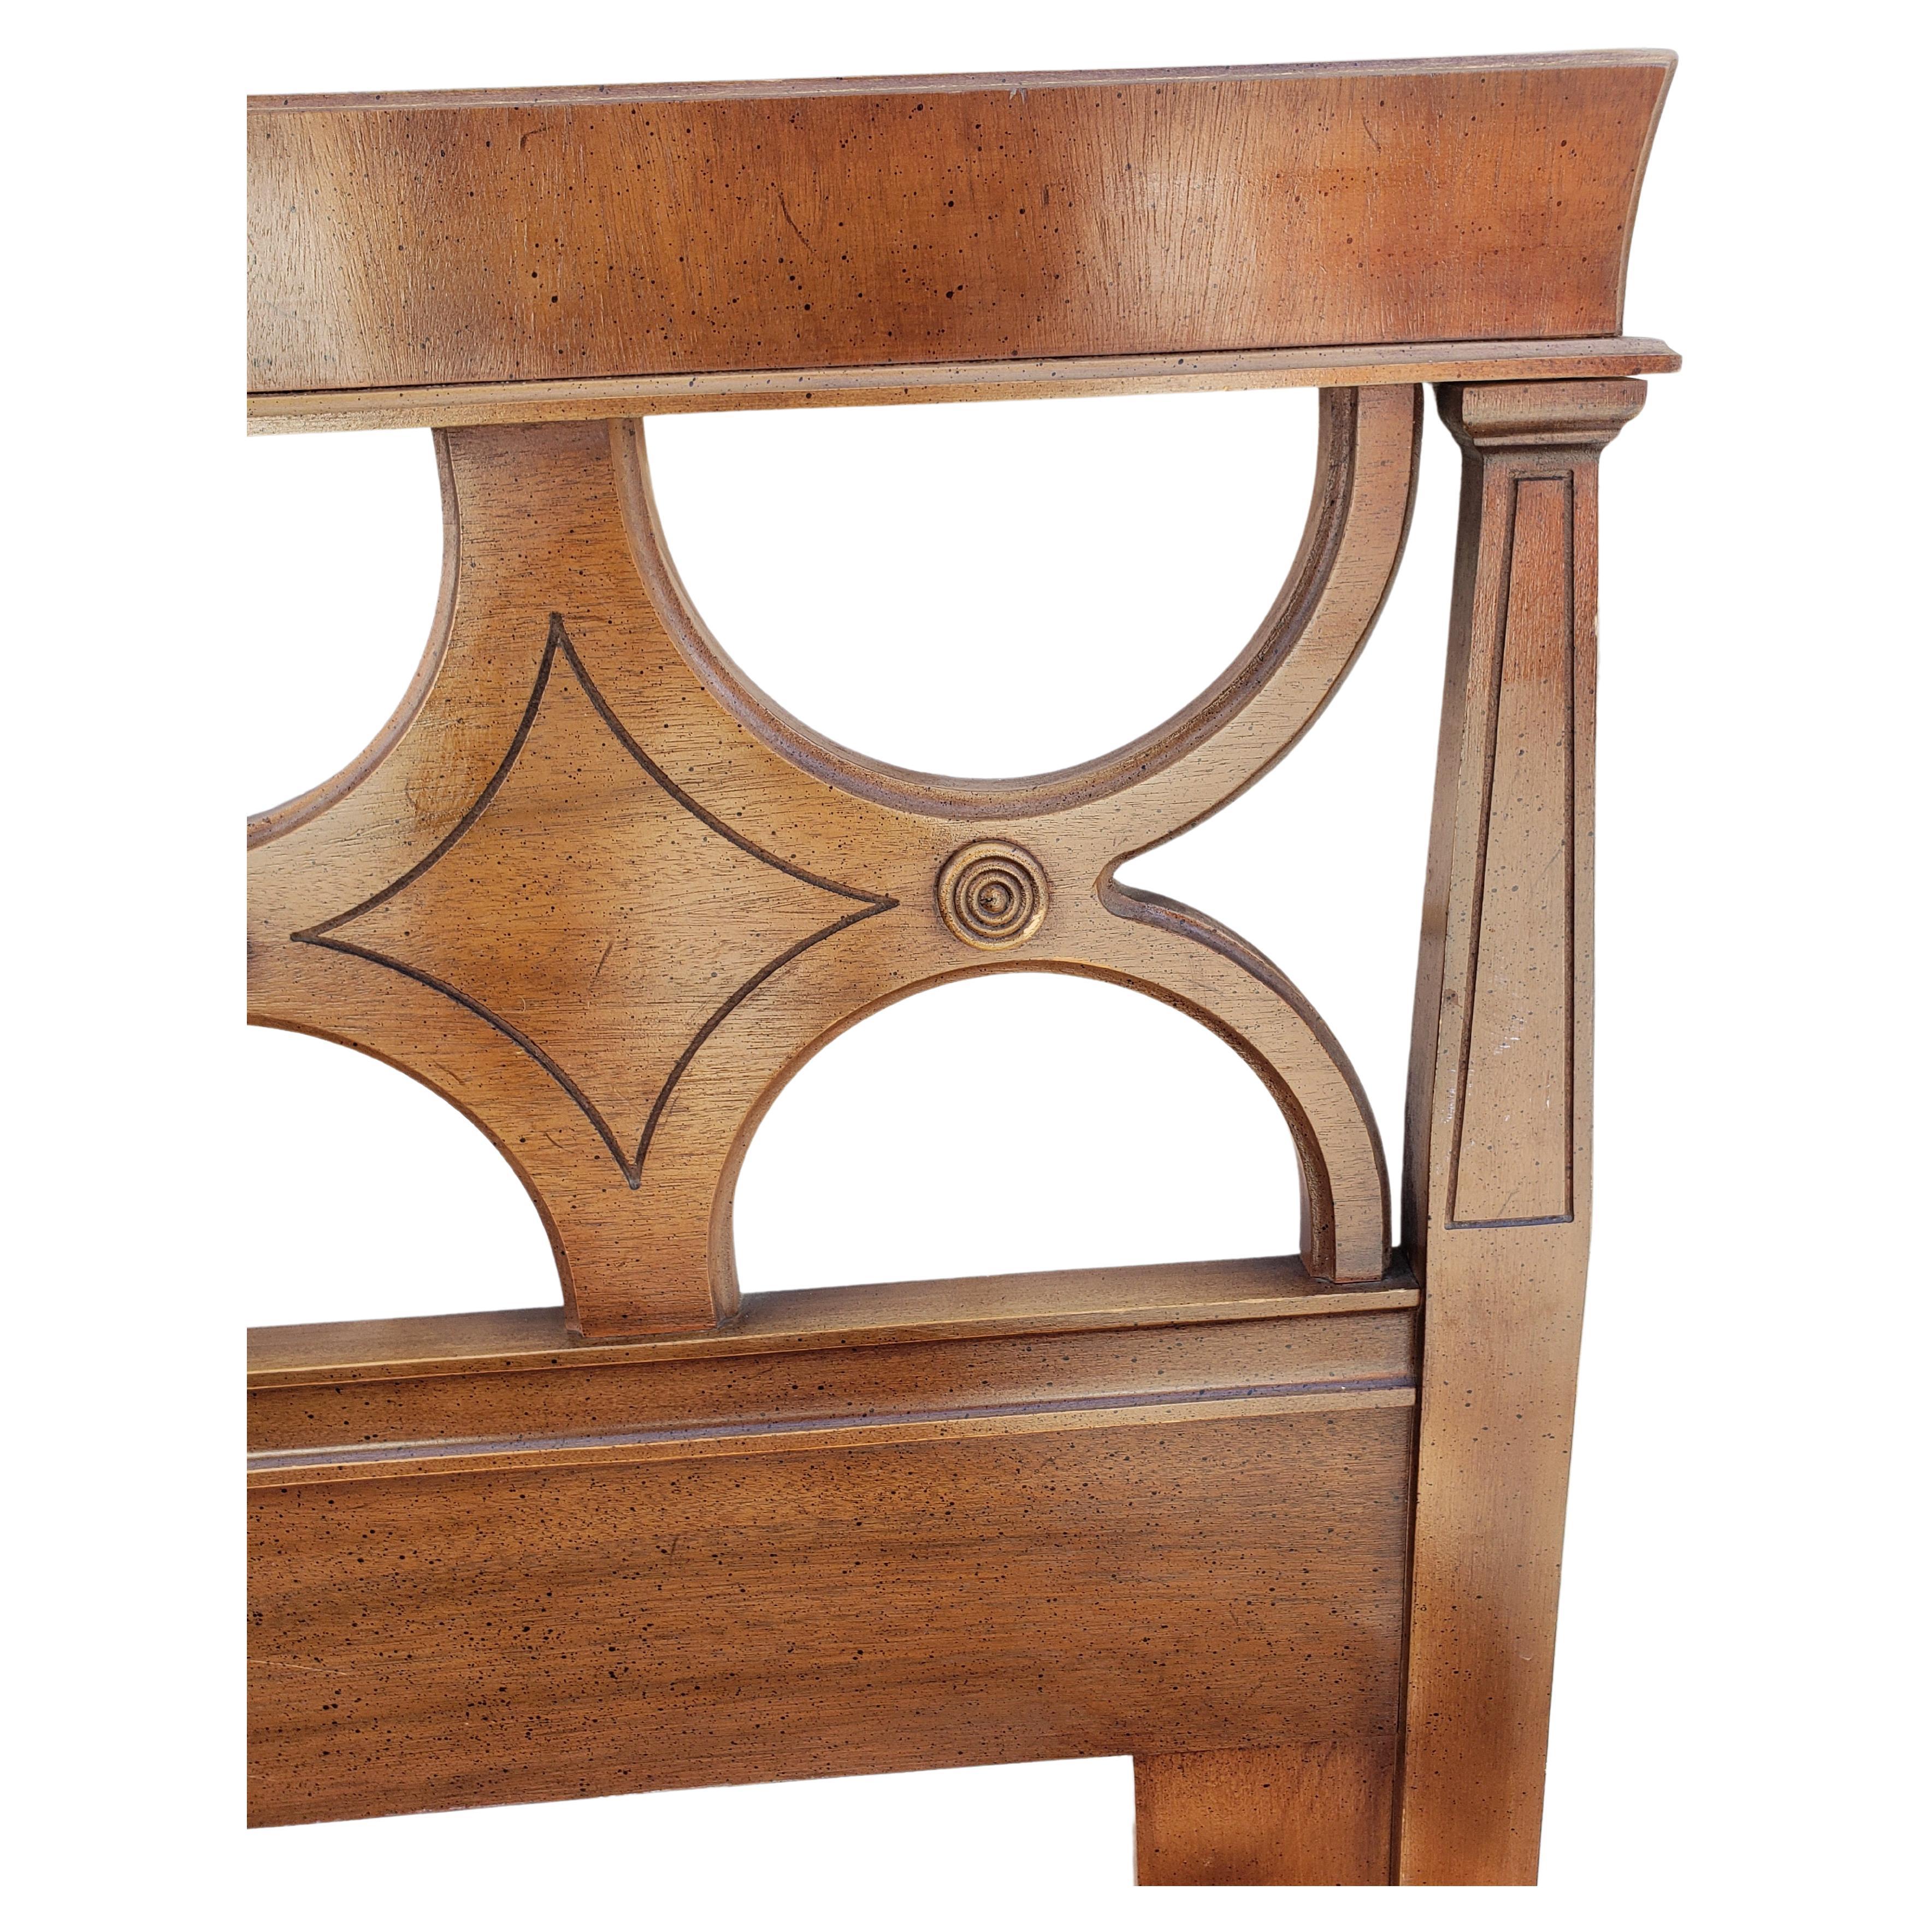 Dixie Furniture Mid-Century Modern walnut queen size headboard. 
Good vintage condition.
Measures 42